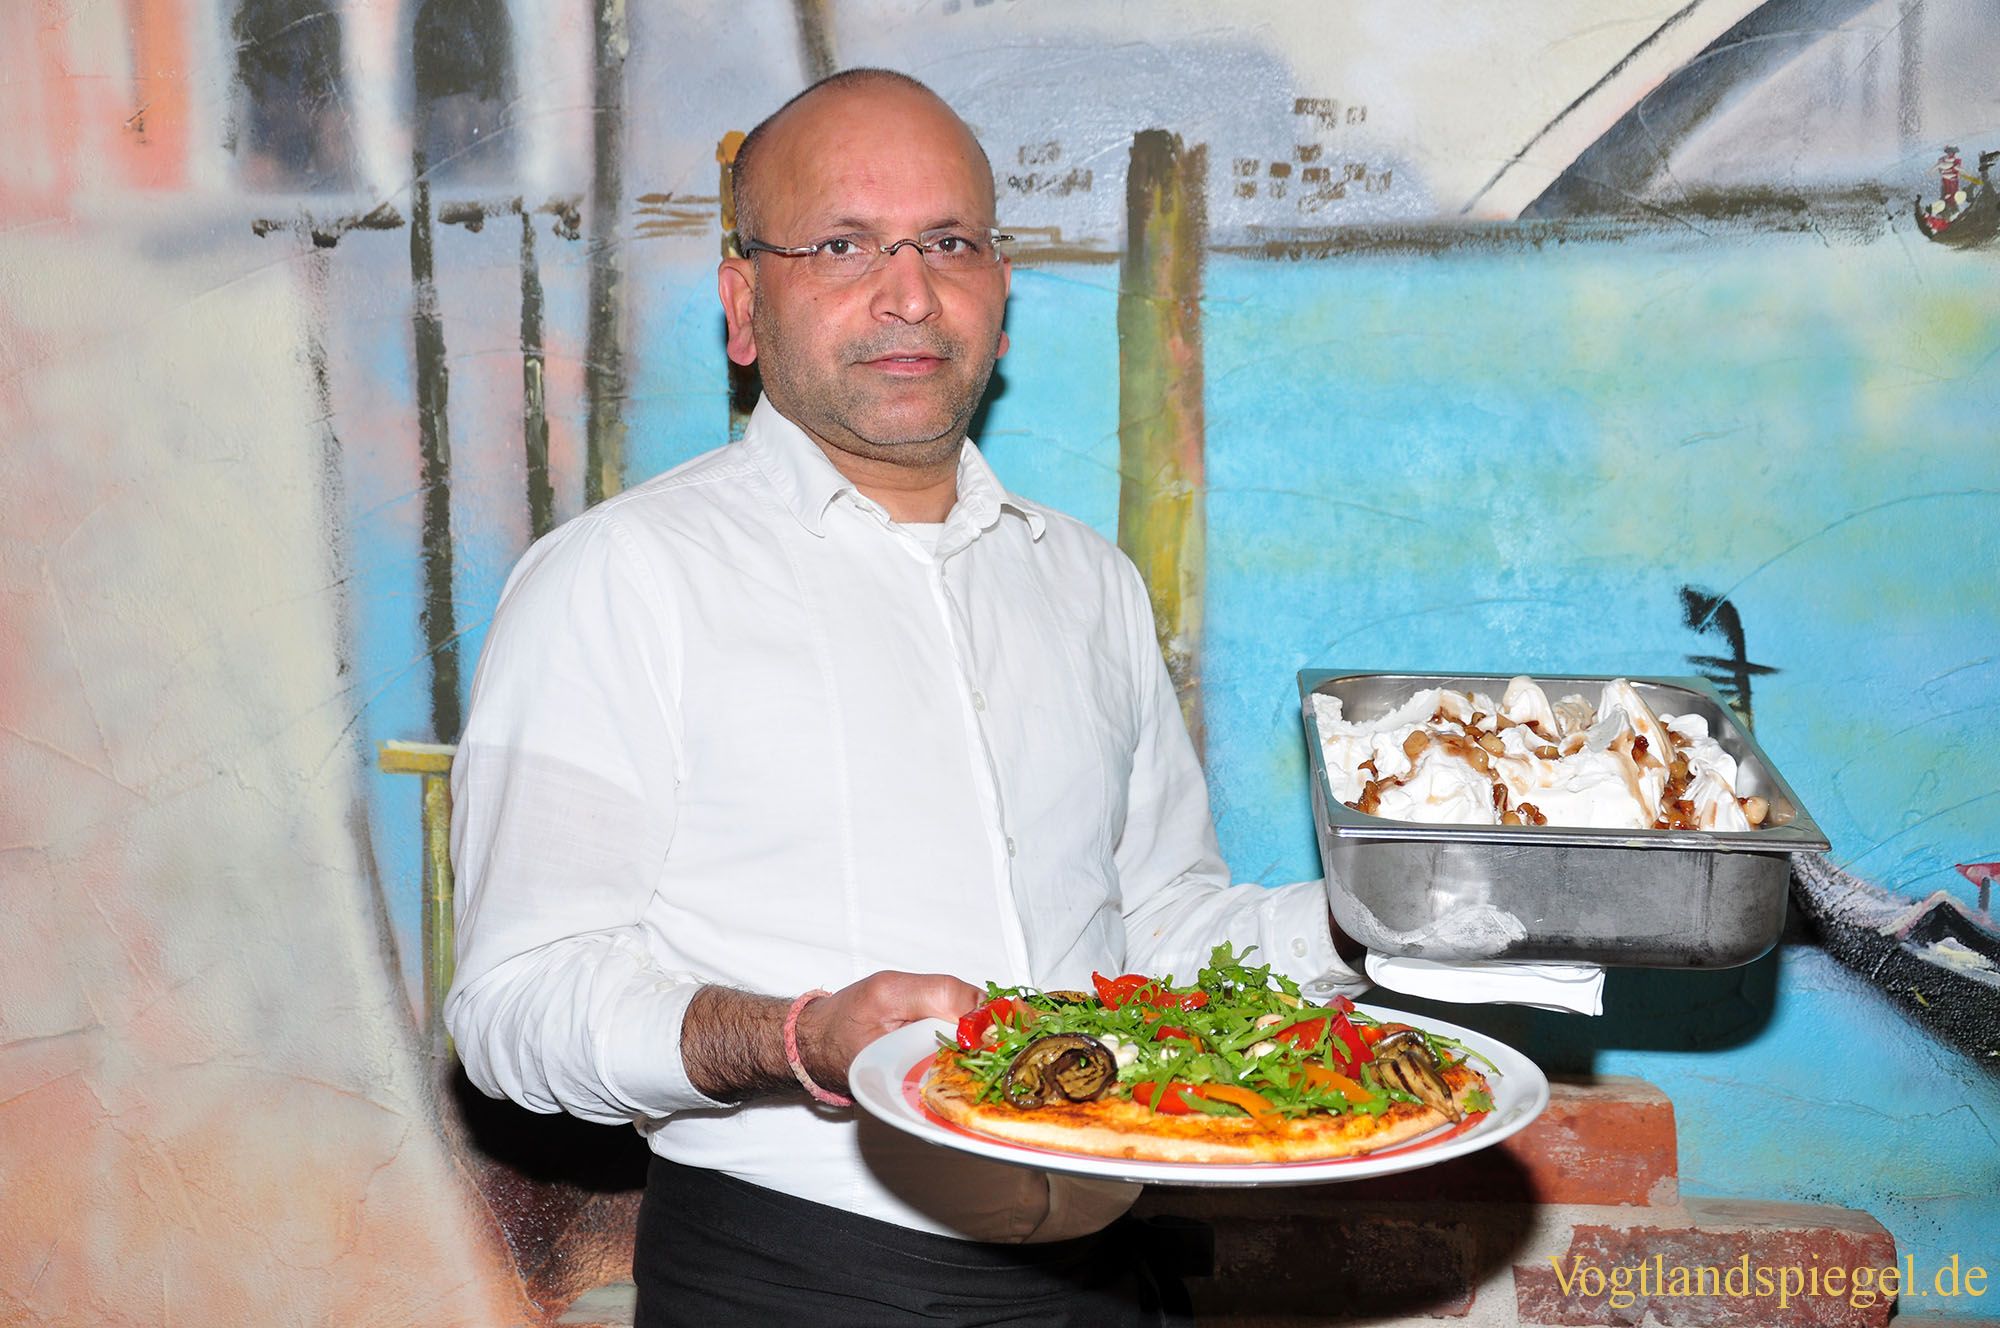 Padam Sharma vom Restaurant "Da Papu"